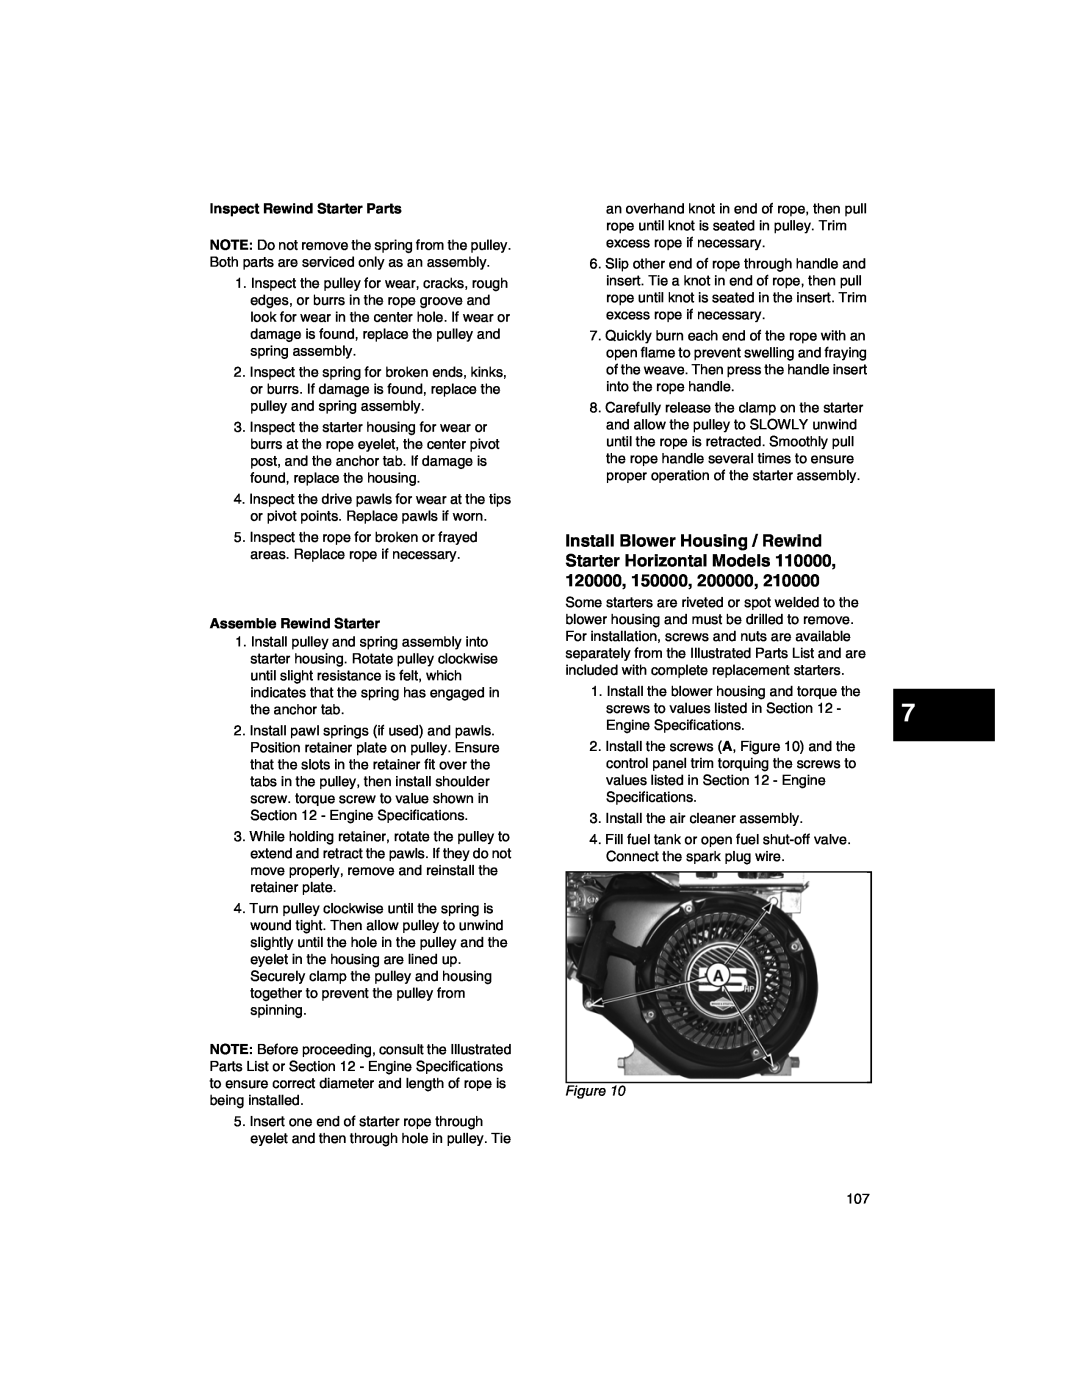 Briggs & Stratton 271172, 270962, CE8069, 276535, 273521 manual Inspect Rewind Starter Parts, Assemble Rewind Starter 